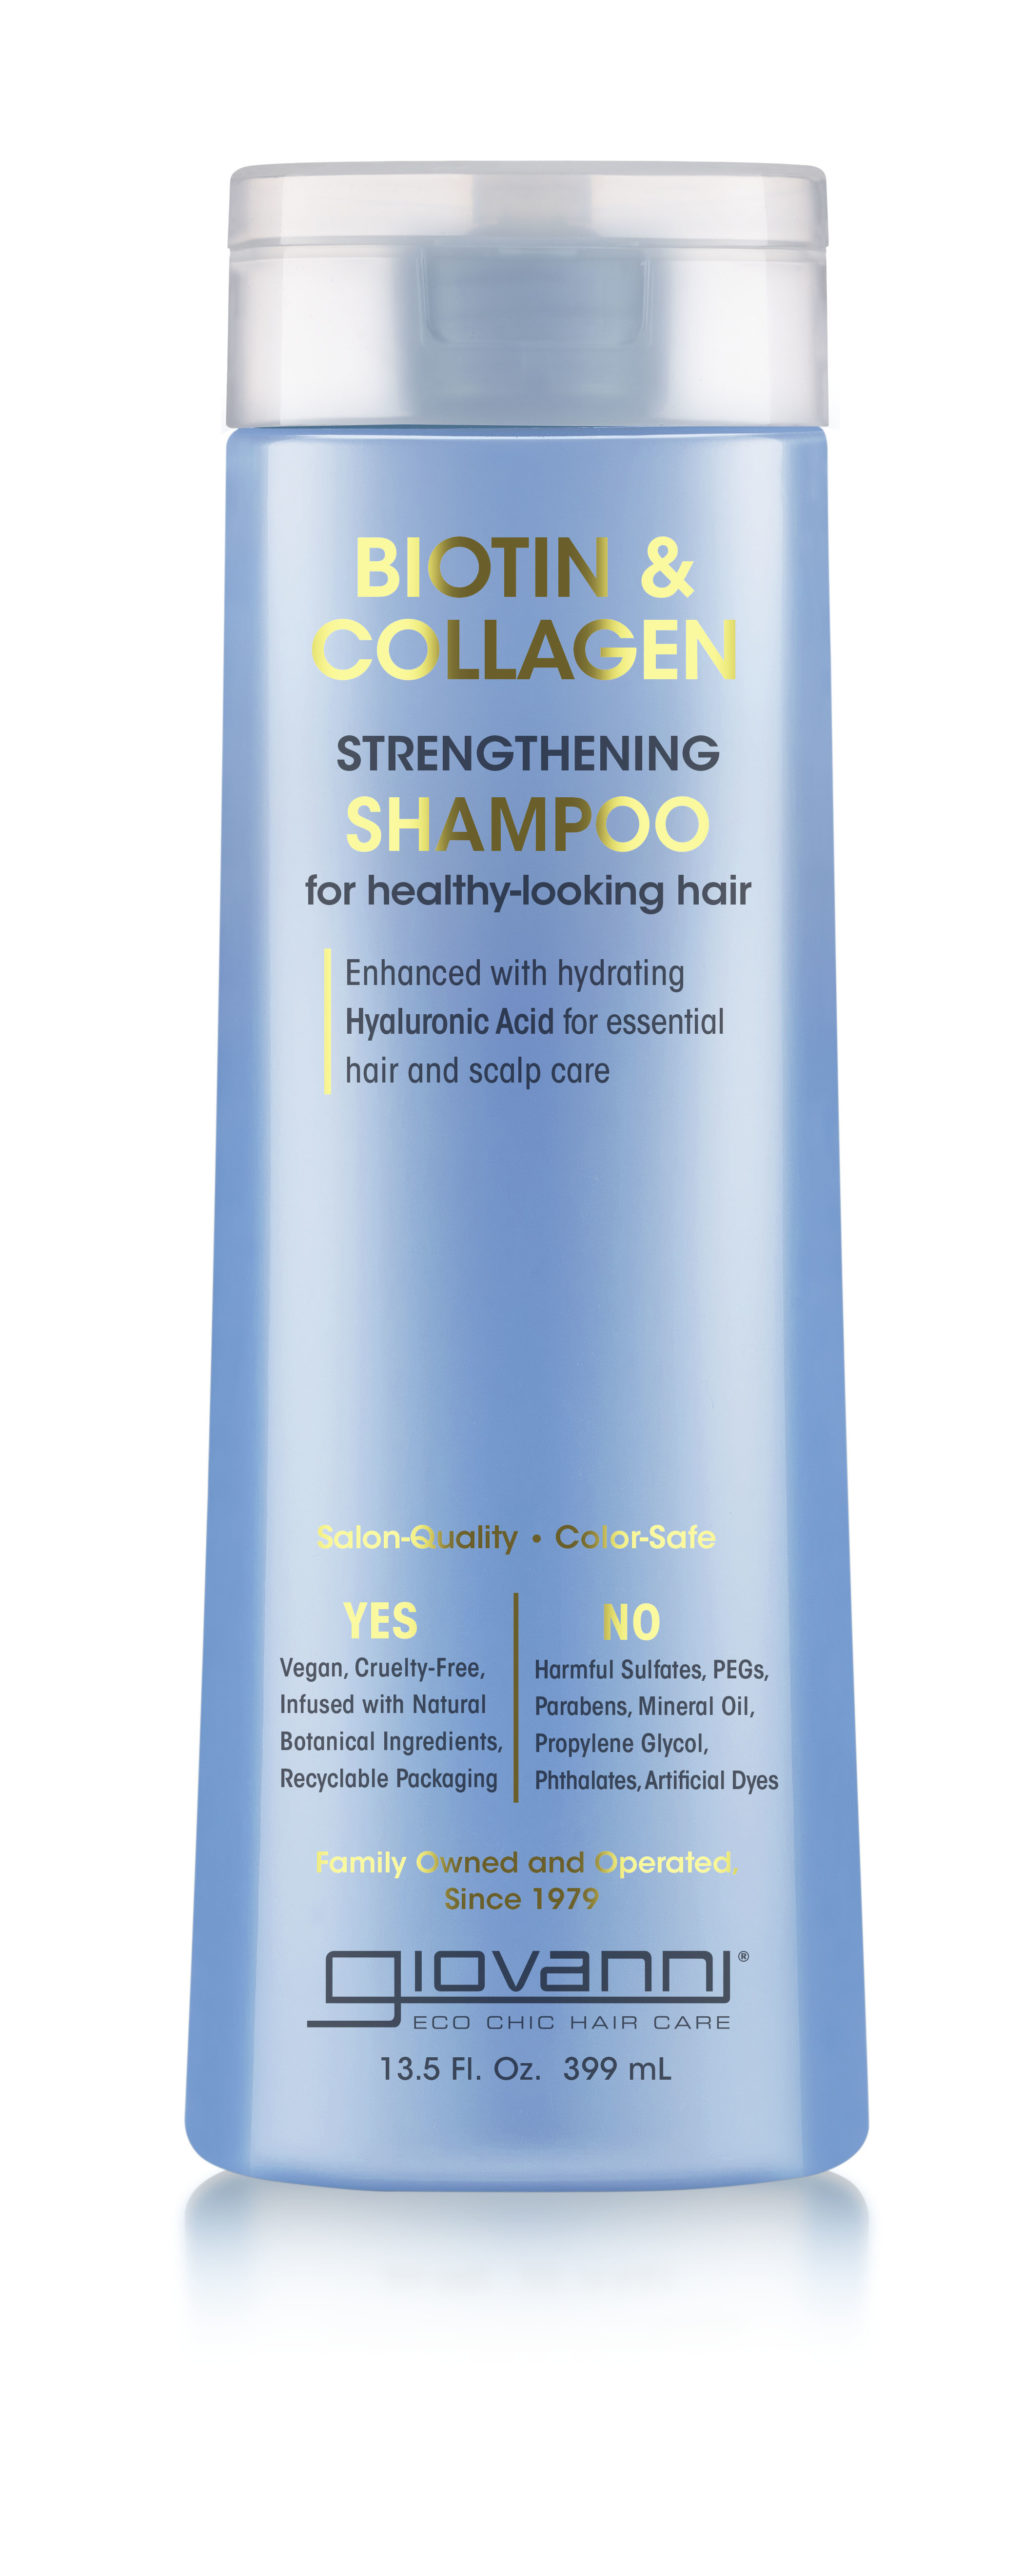 BIOTIN & COLLAGEN Shampoo strengthening formula